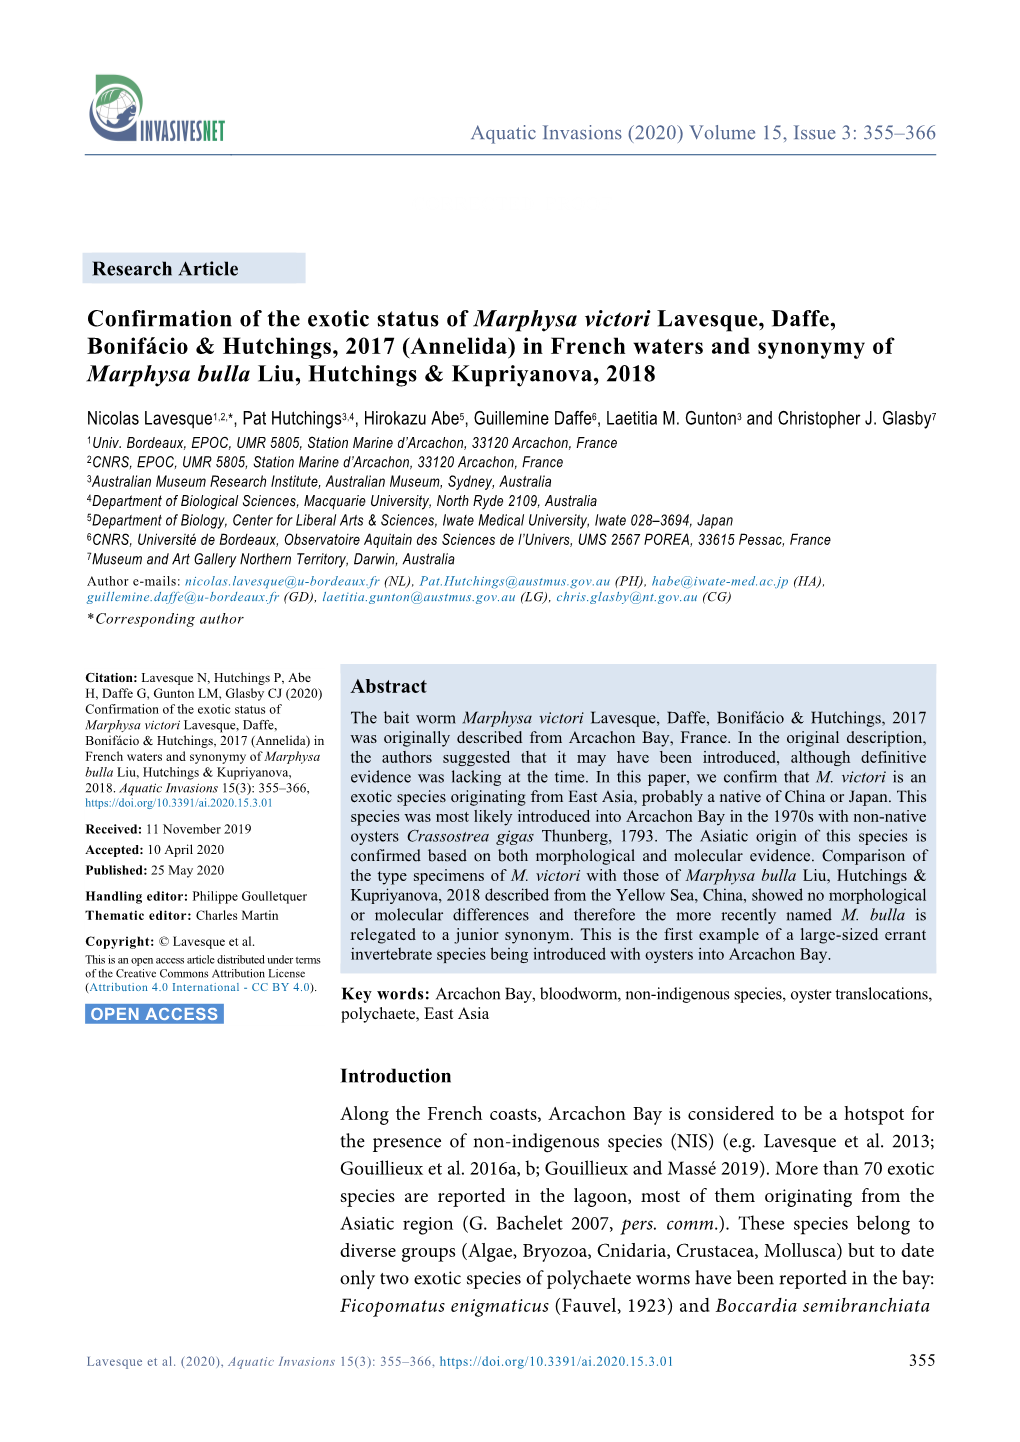 Annelida) in French Waters and Synonymy of Marphysa Bulla Liu, Hutchings & Kupriyanova, 2018